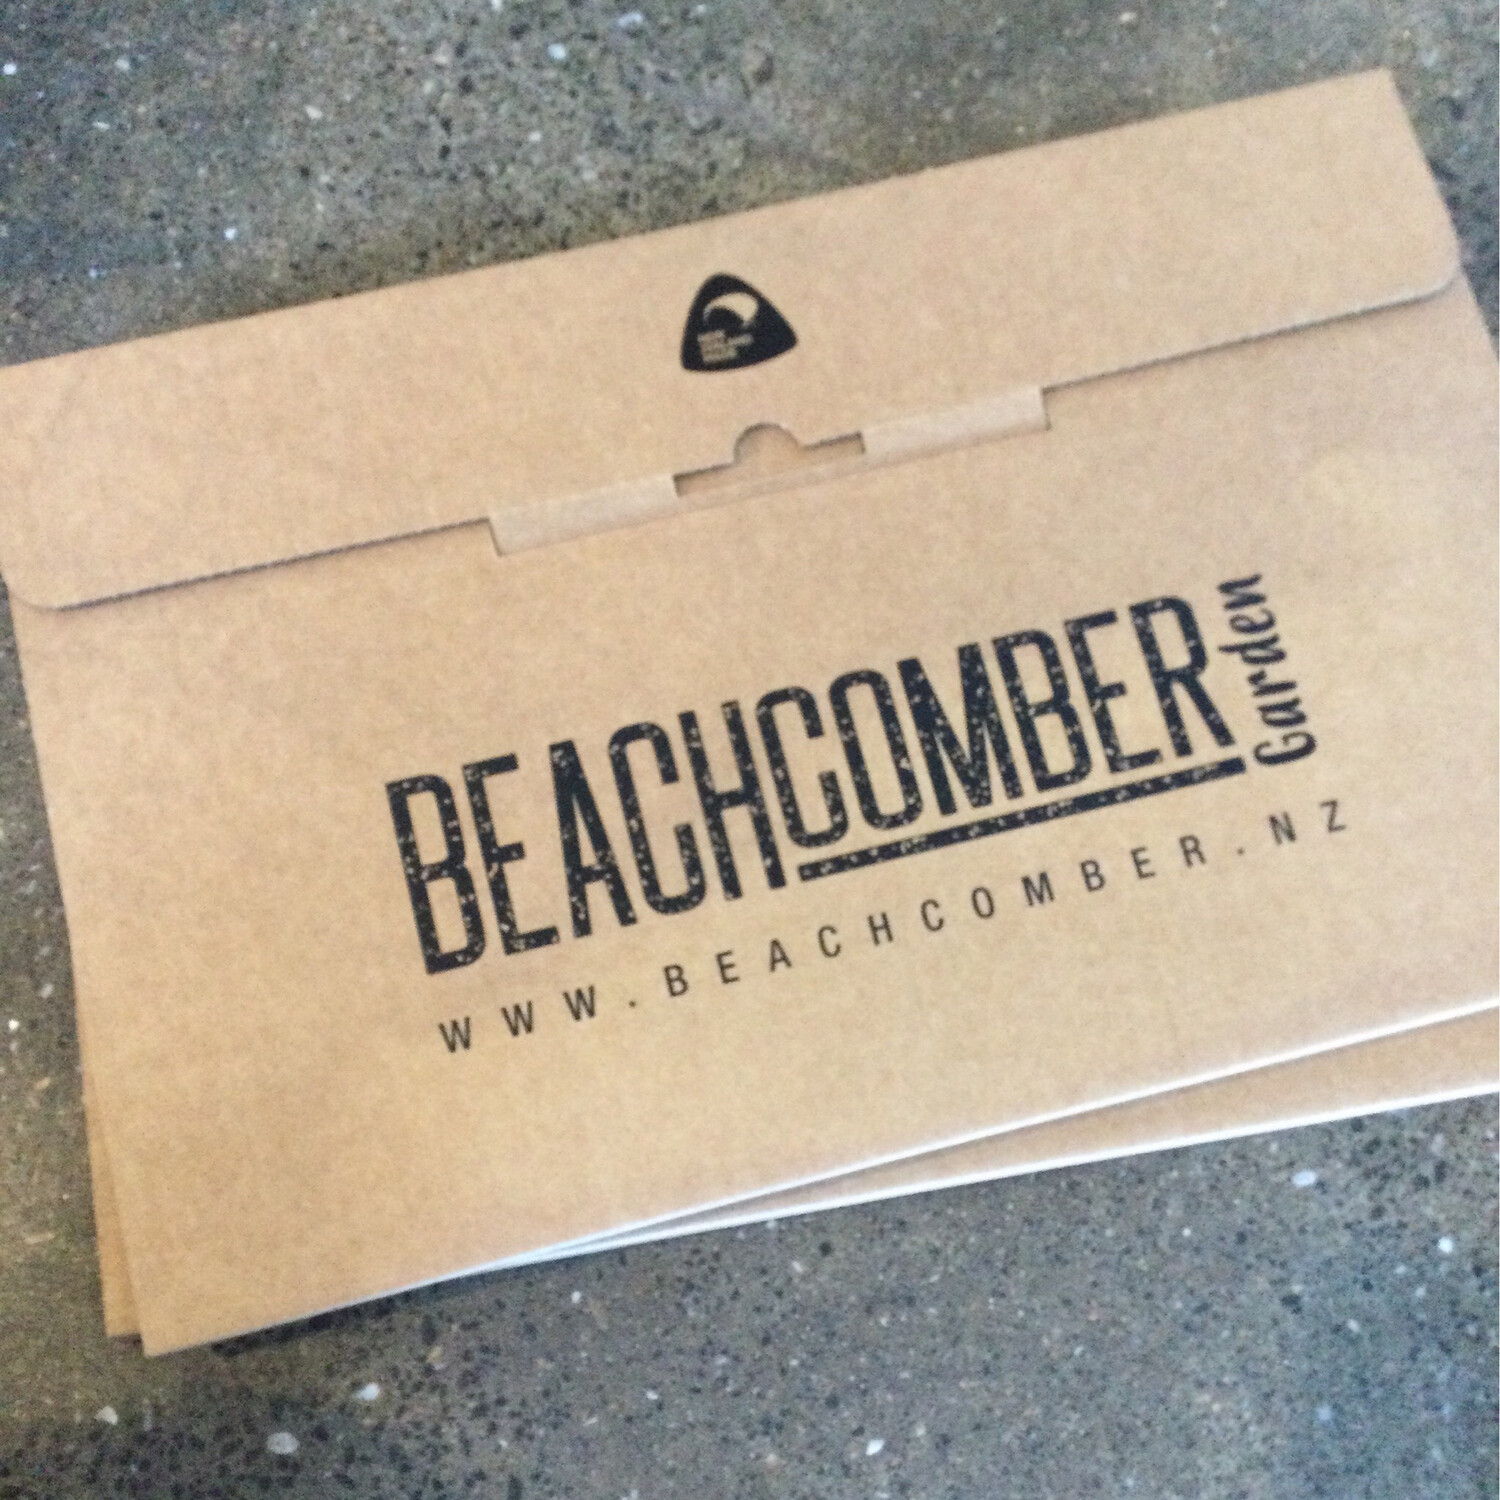 Beachcomber Box